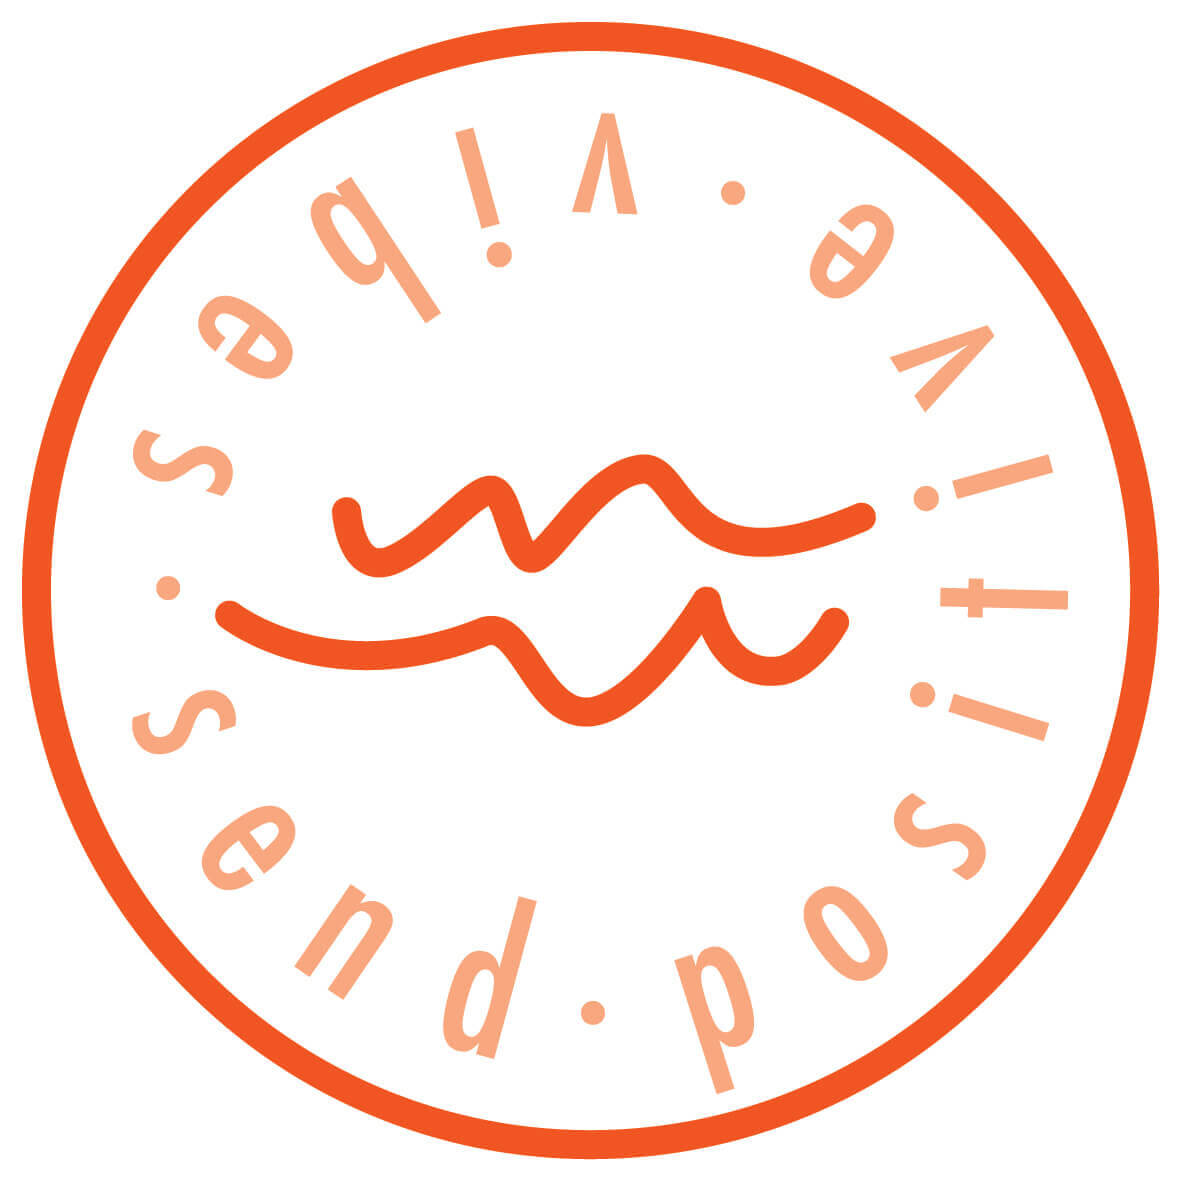 spv-logo